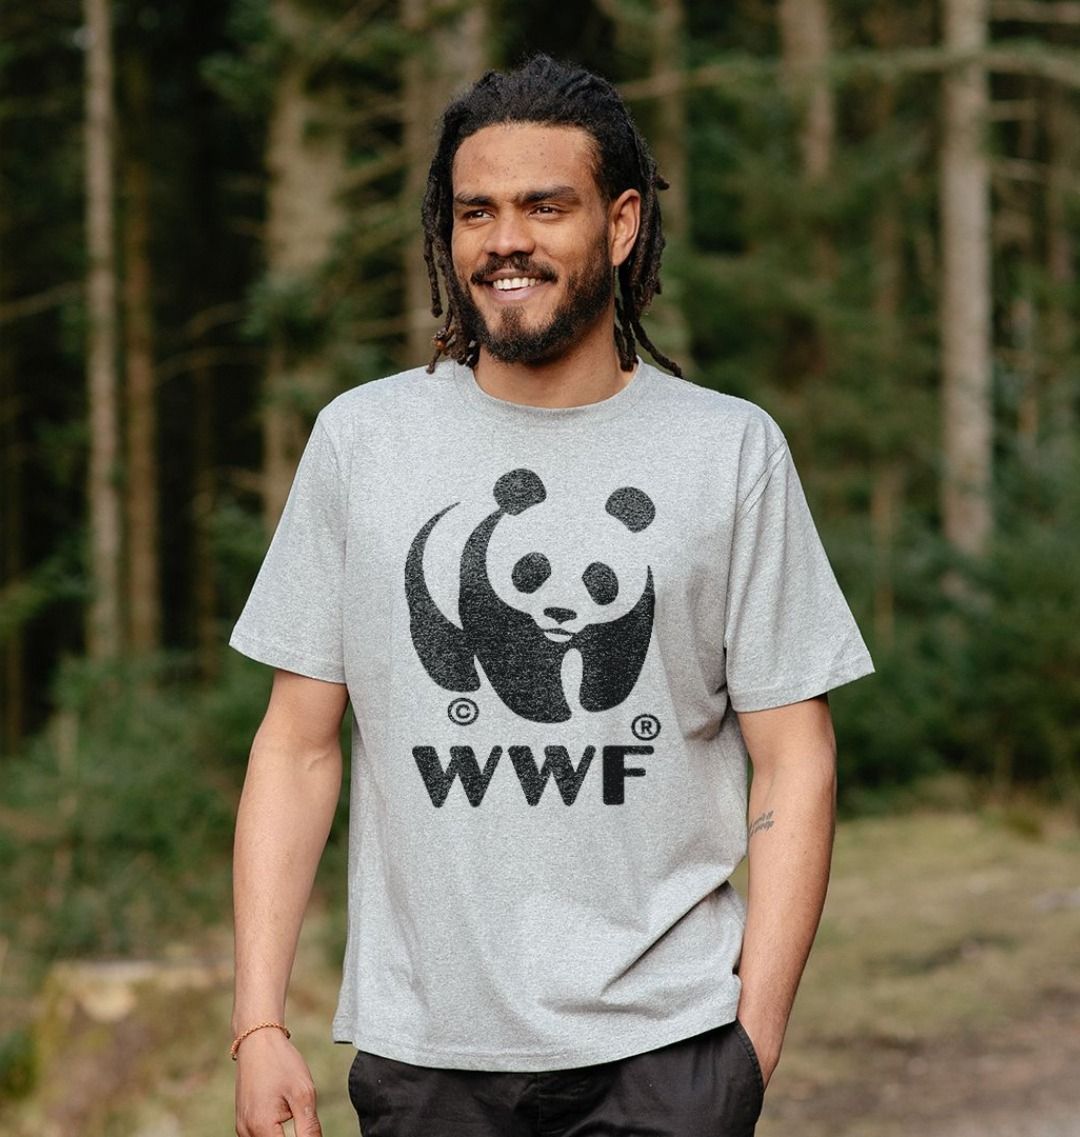 WWF T-shirt